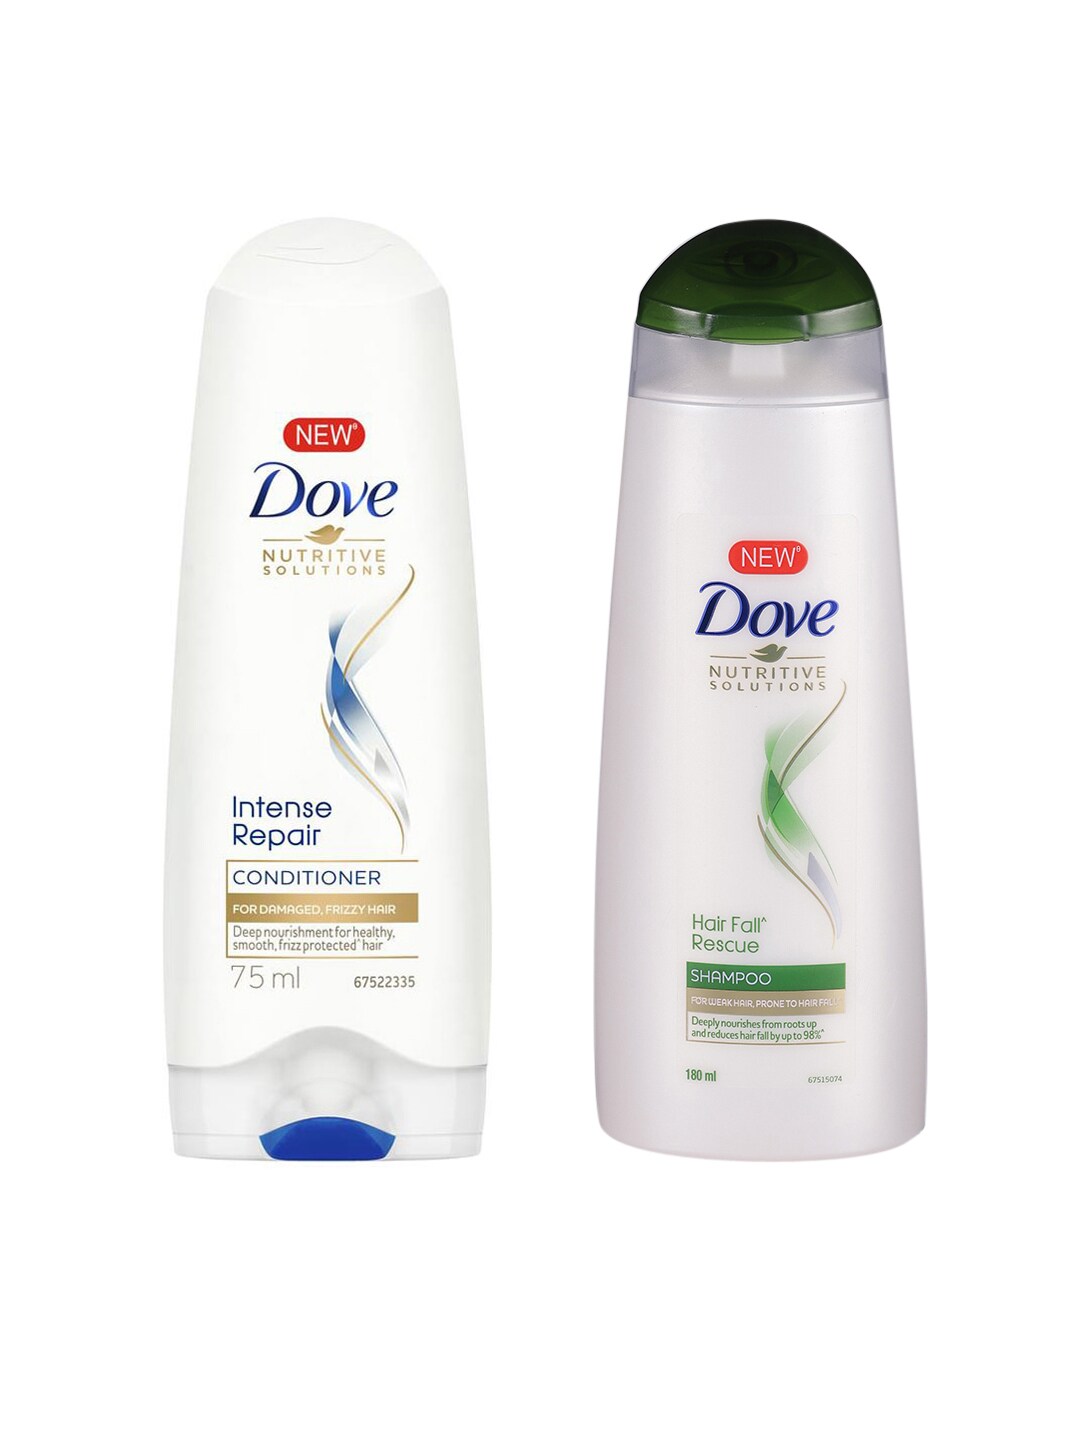 Dove Unisex Hair Fall Rescue Shampoo 180 ml & Intense Repair Conditioner 75 ml Price in India